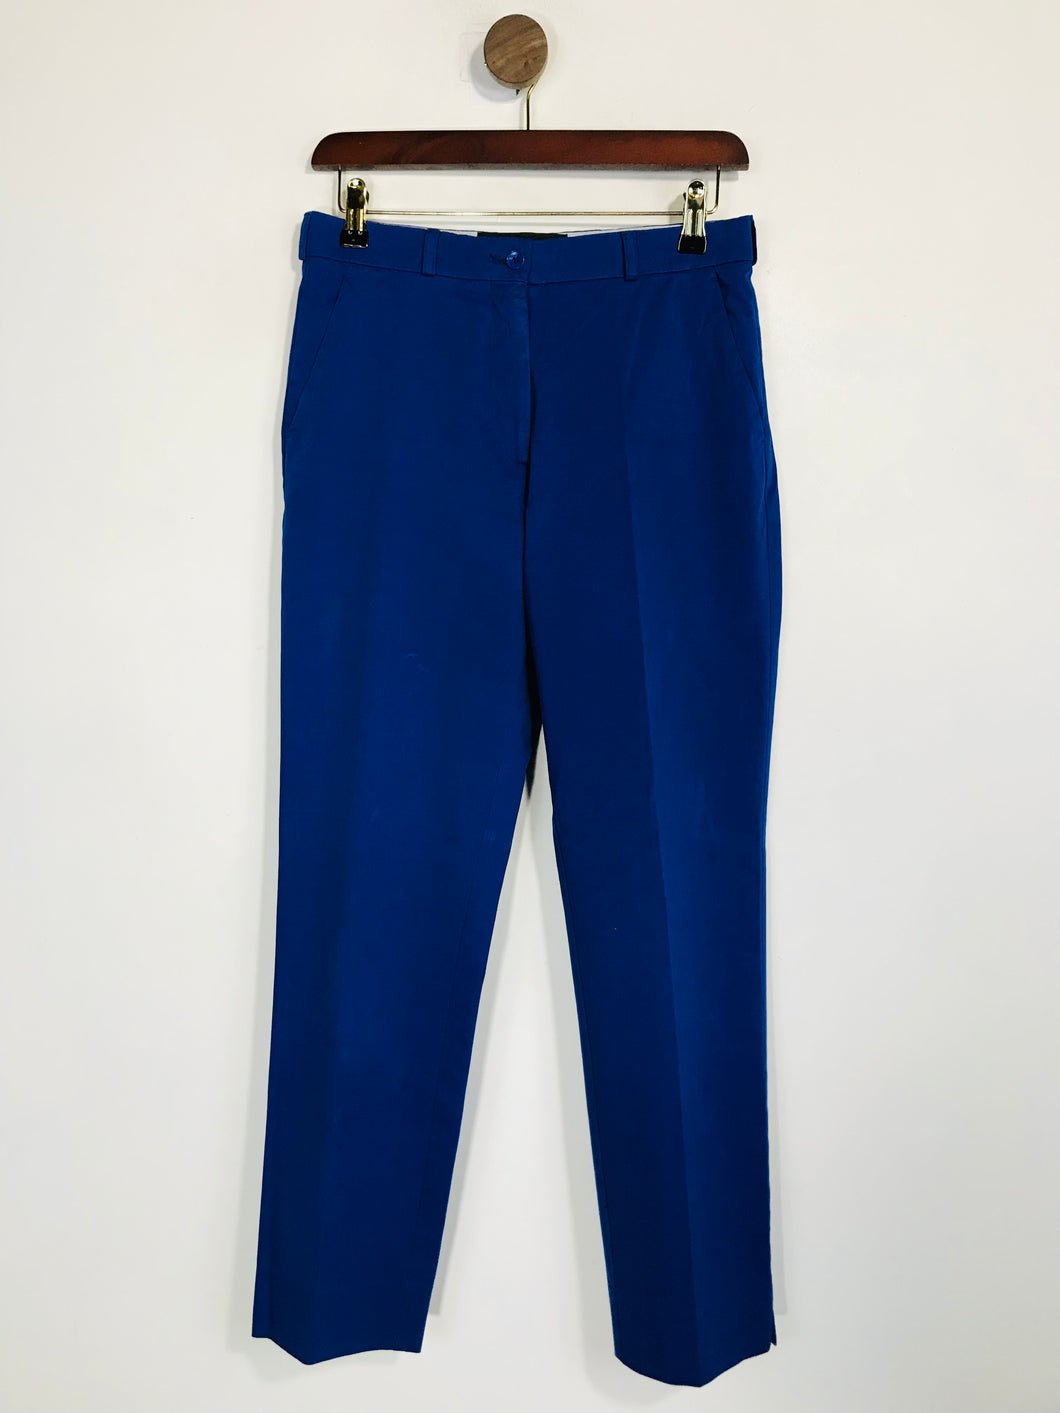 Etro 40 Women's Chinos Trousers | W27 UK8-10 | Blue